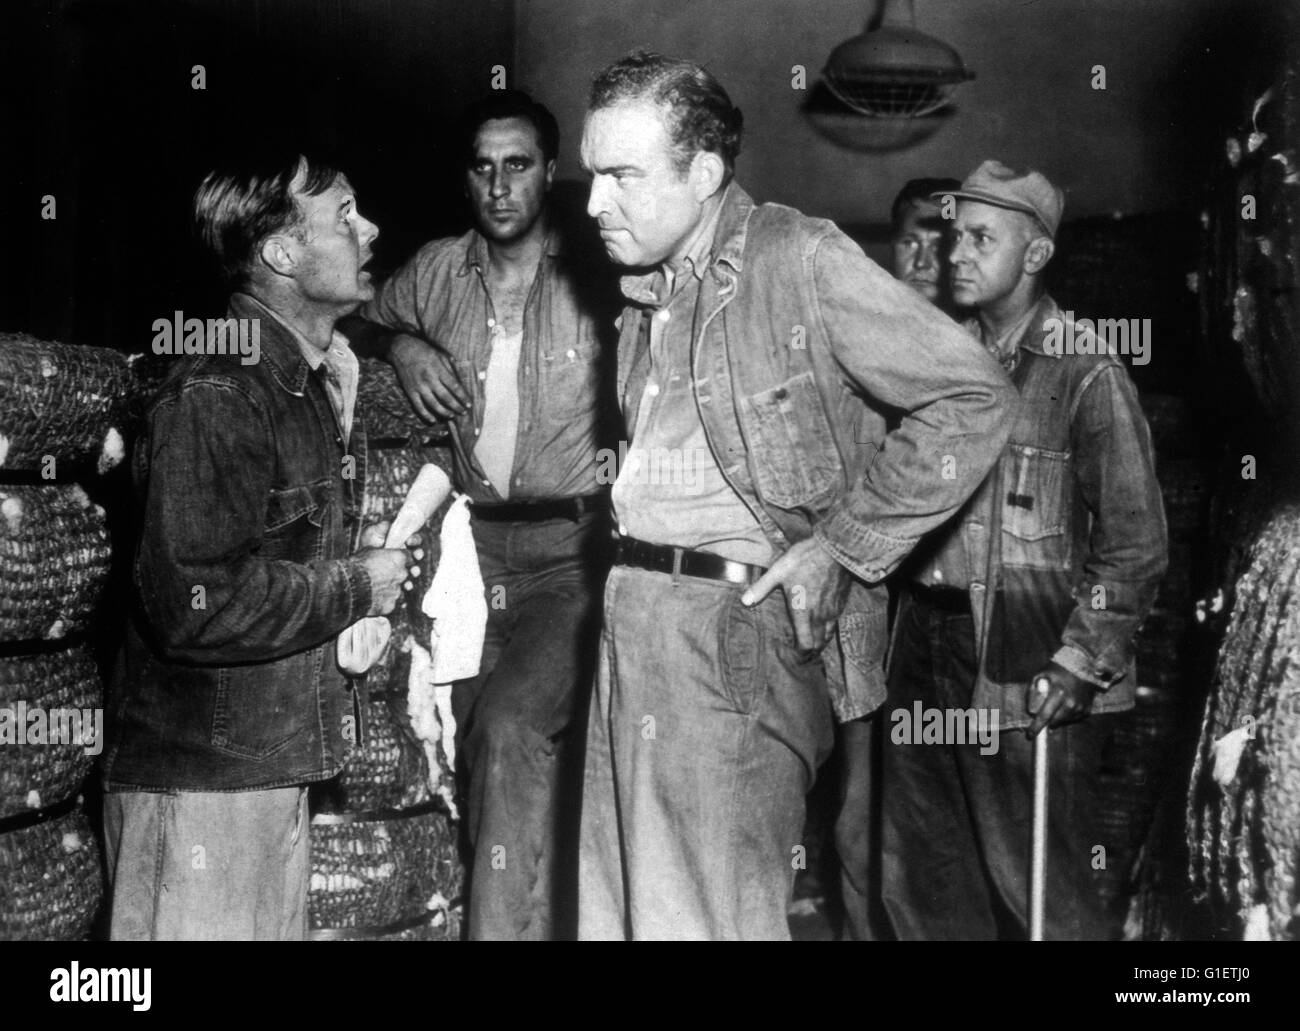 La rivolta nella grande casa, aka: Mit dem Messer im Rücken, USA 1958, Regie: R. G. Springsteen, Darsteller: Robert Blake (links), Gene Evans (rechts) Foto Stock